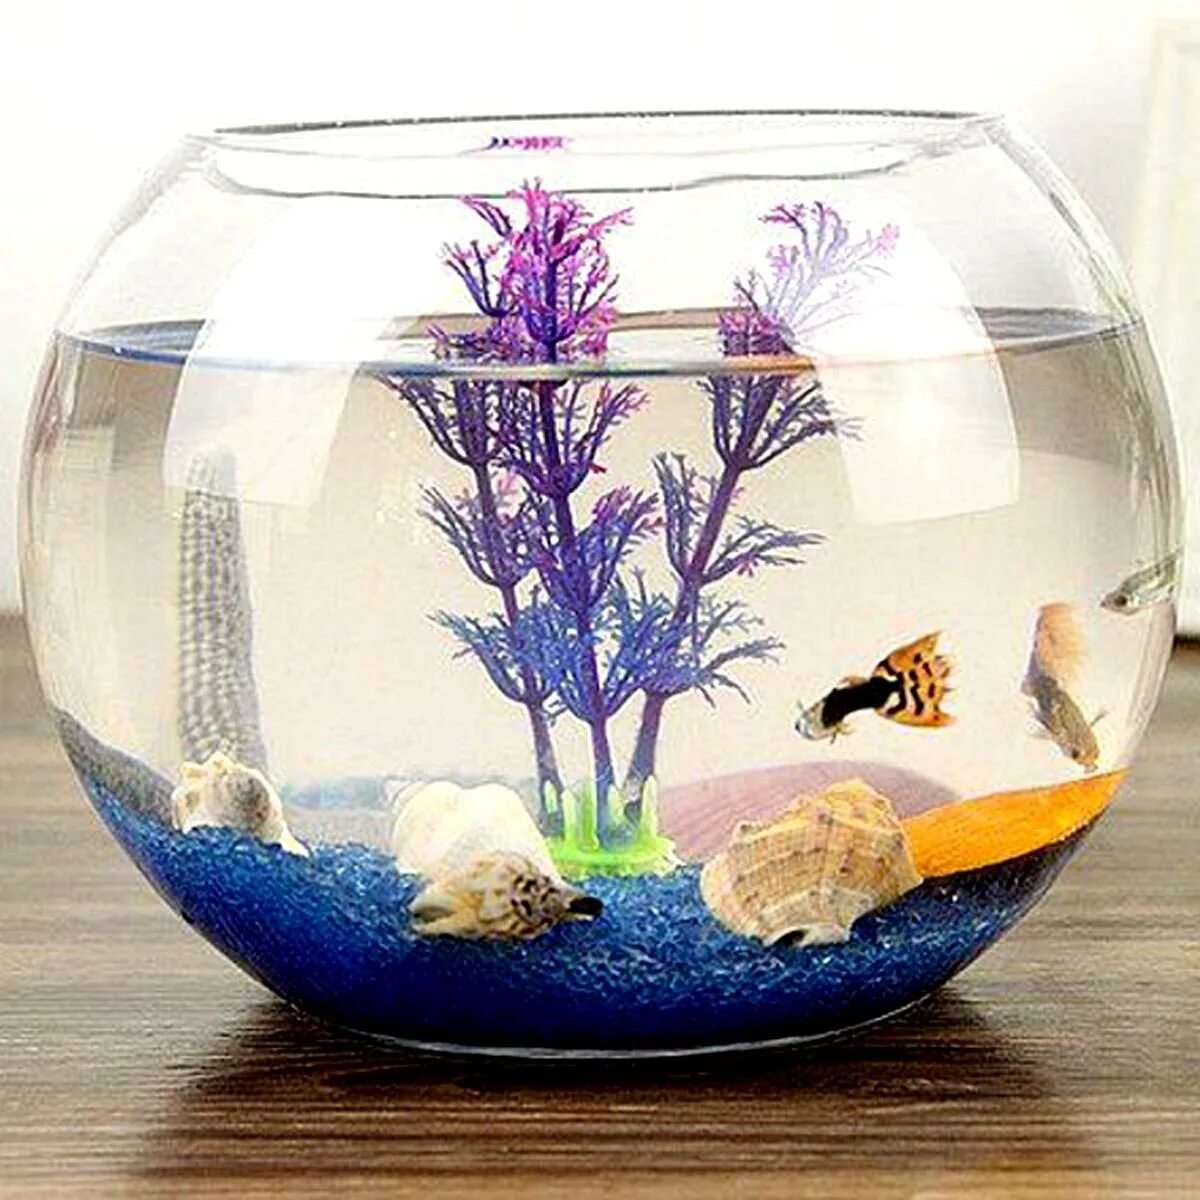 Аквариум (Fish Tank) 2009. Аквариум маленький круглый. Маленький круглый аквариум для рыбок. Круглый аквариум с рыбками.